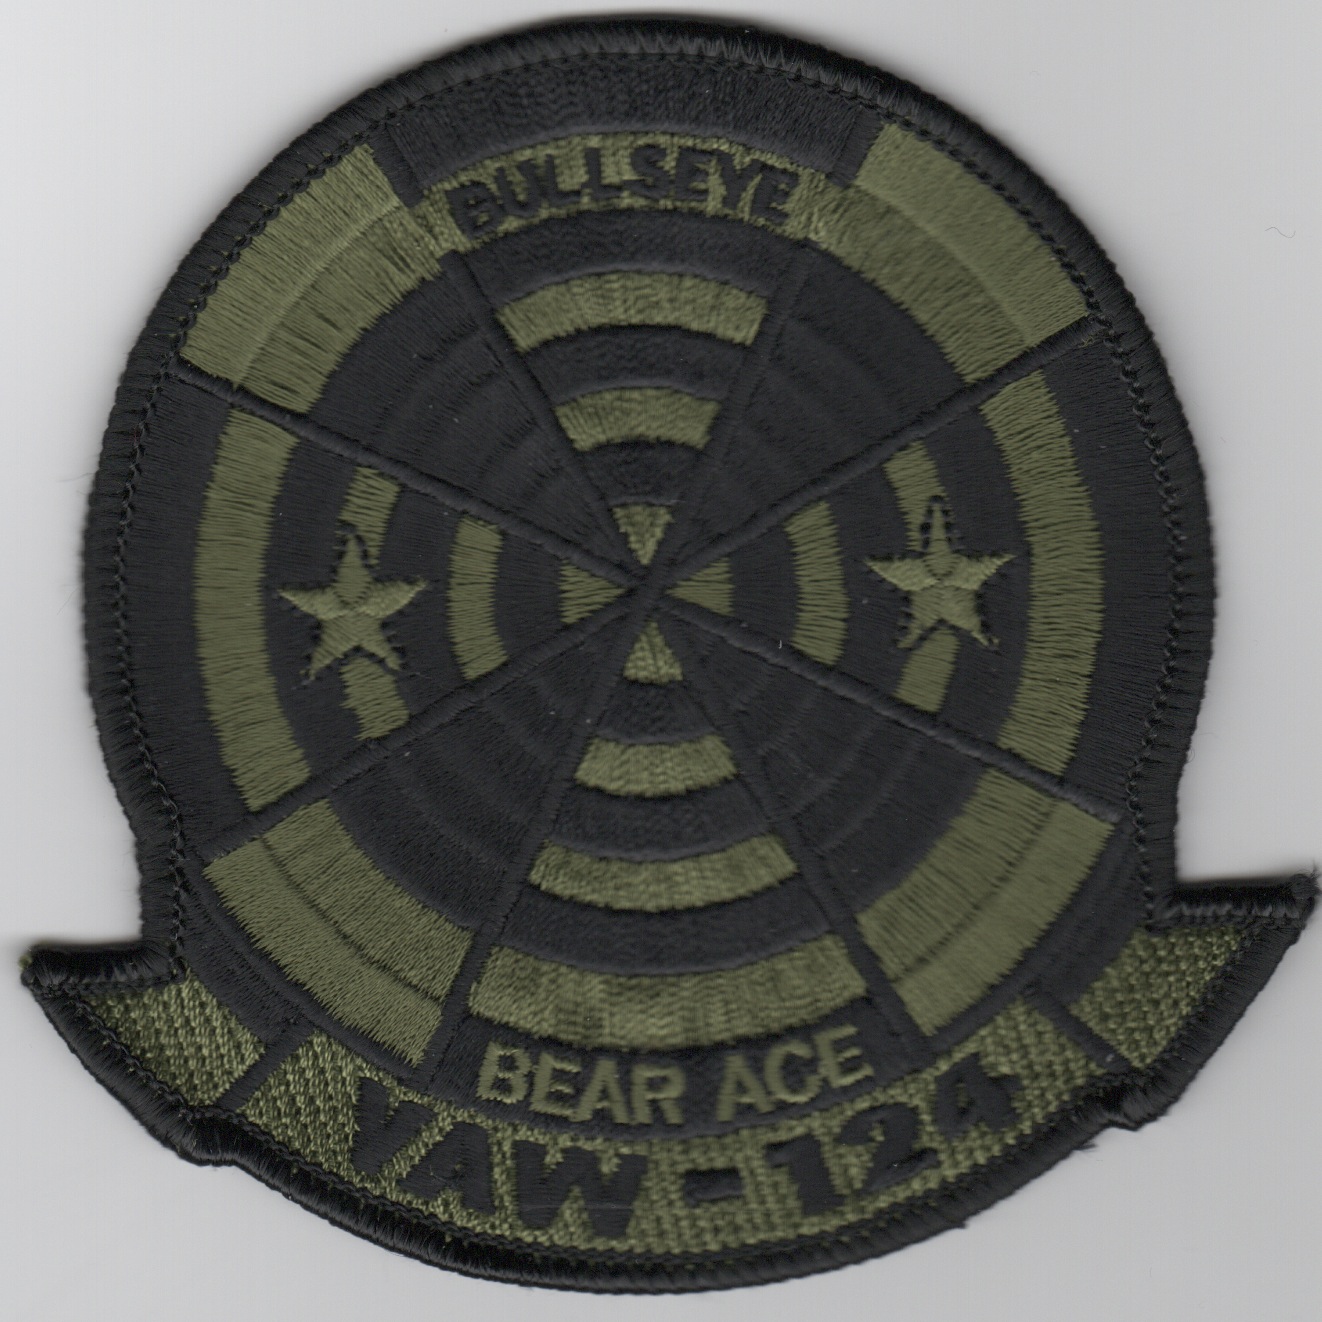 VAW-124 'Black-X' Squadron Patch (Subd)